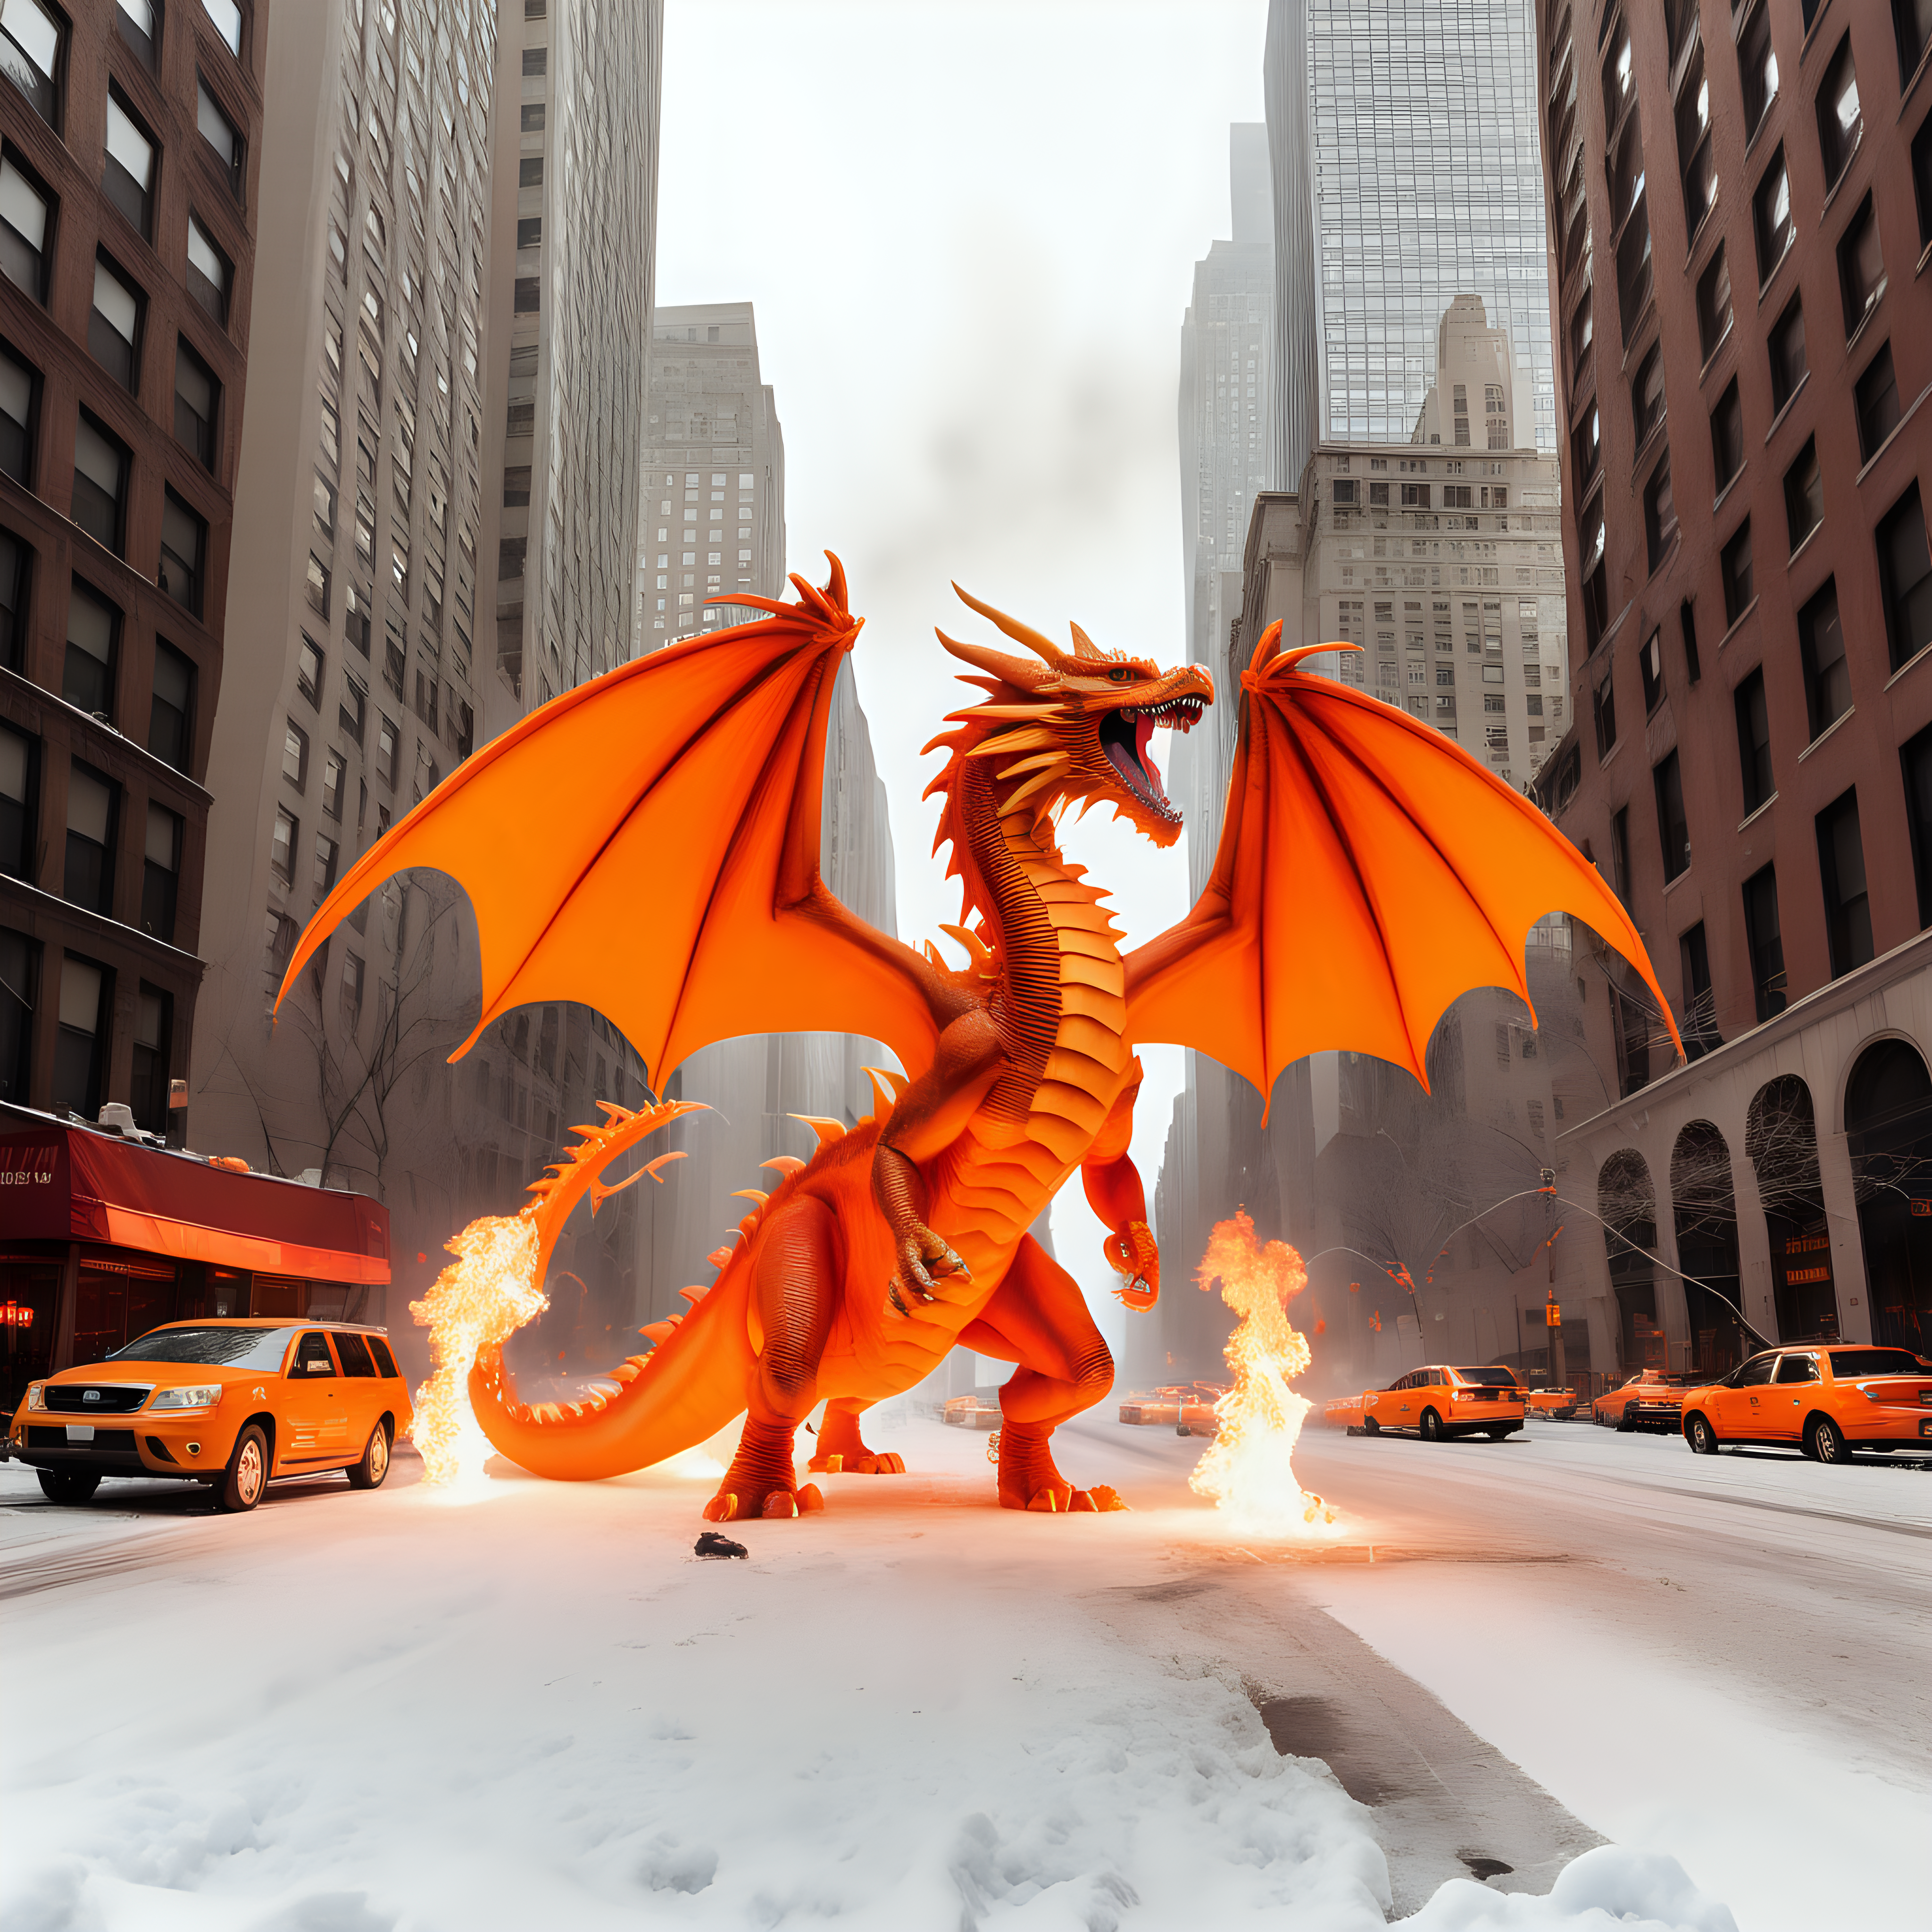 orange 2 headed fire breathing dragon destroying NYC